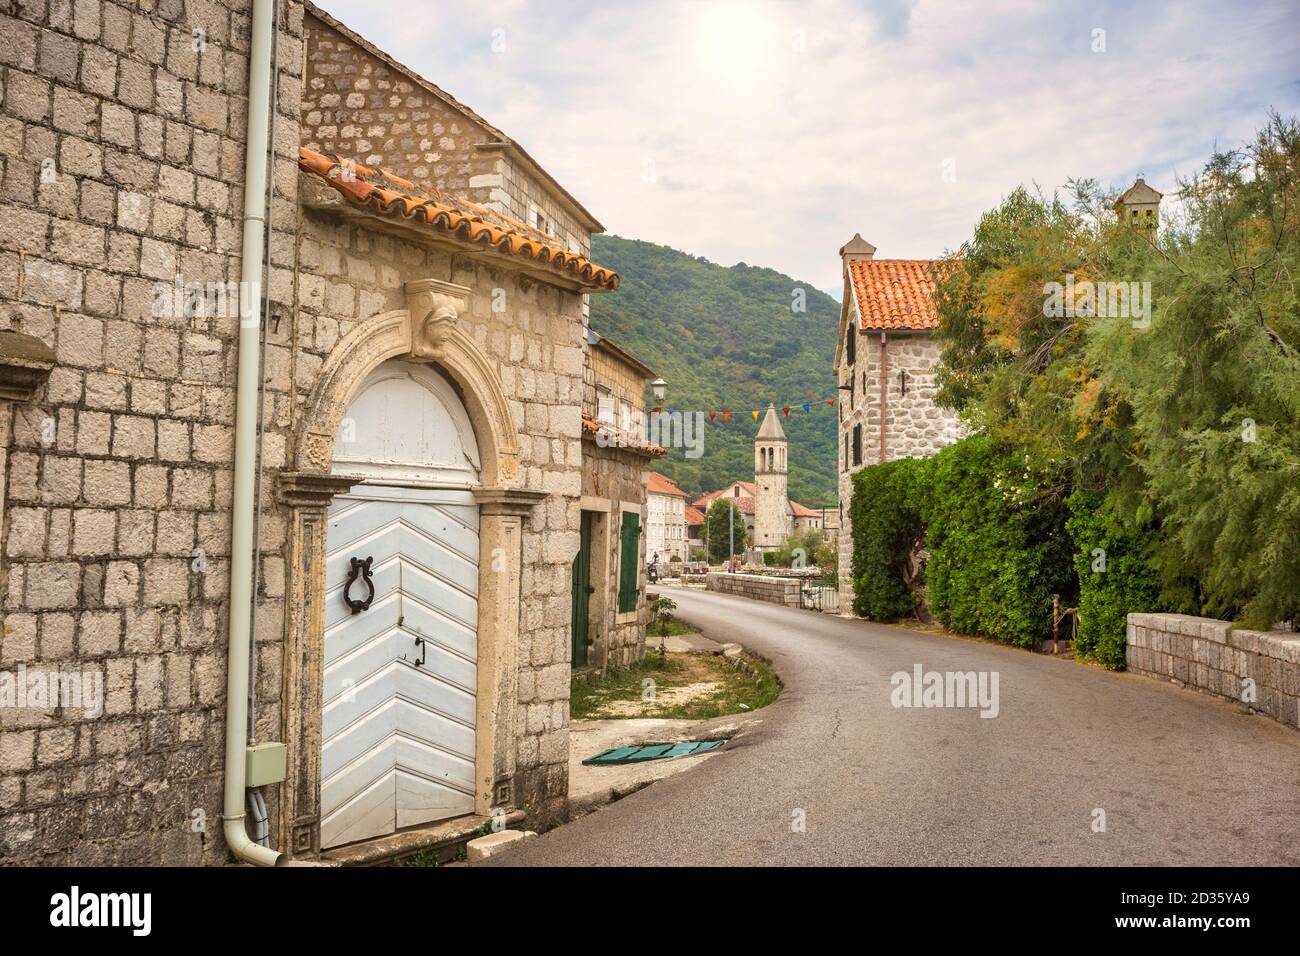 Old traditional mediterranean stone houses in the Bay of Kotor (Boka Kotorska), Montenegro, Europe. Travel concept, background. Stock Photo